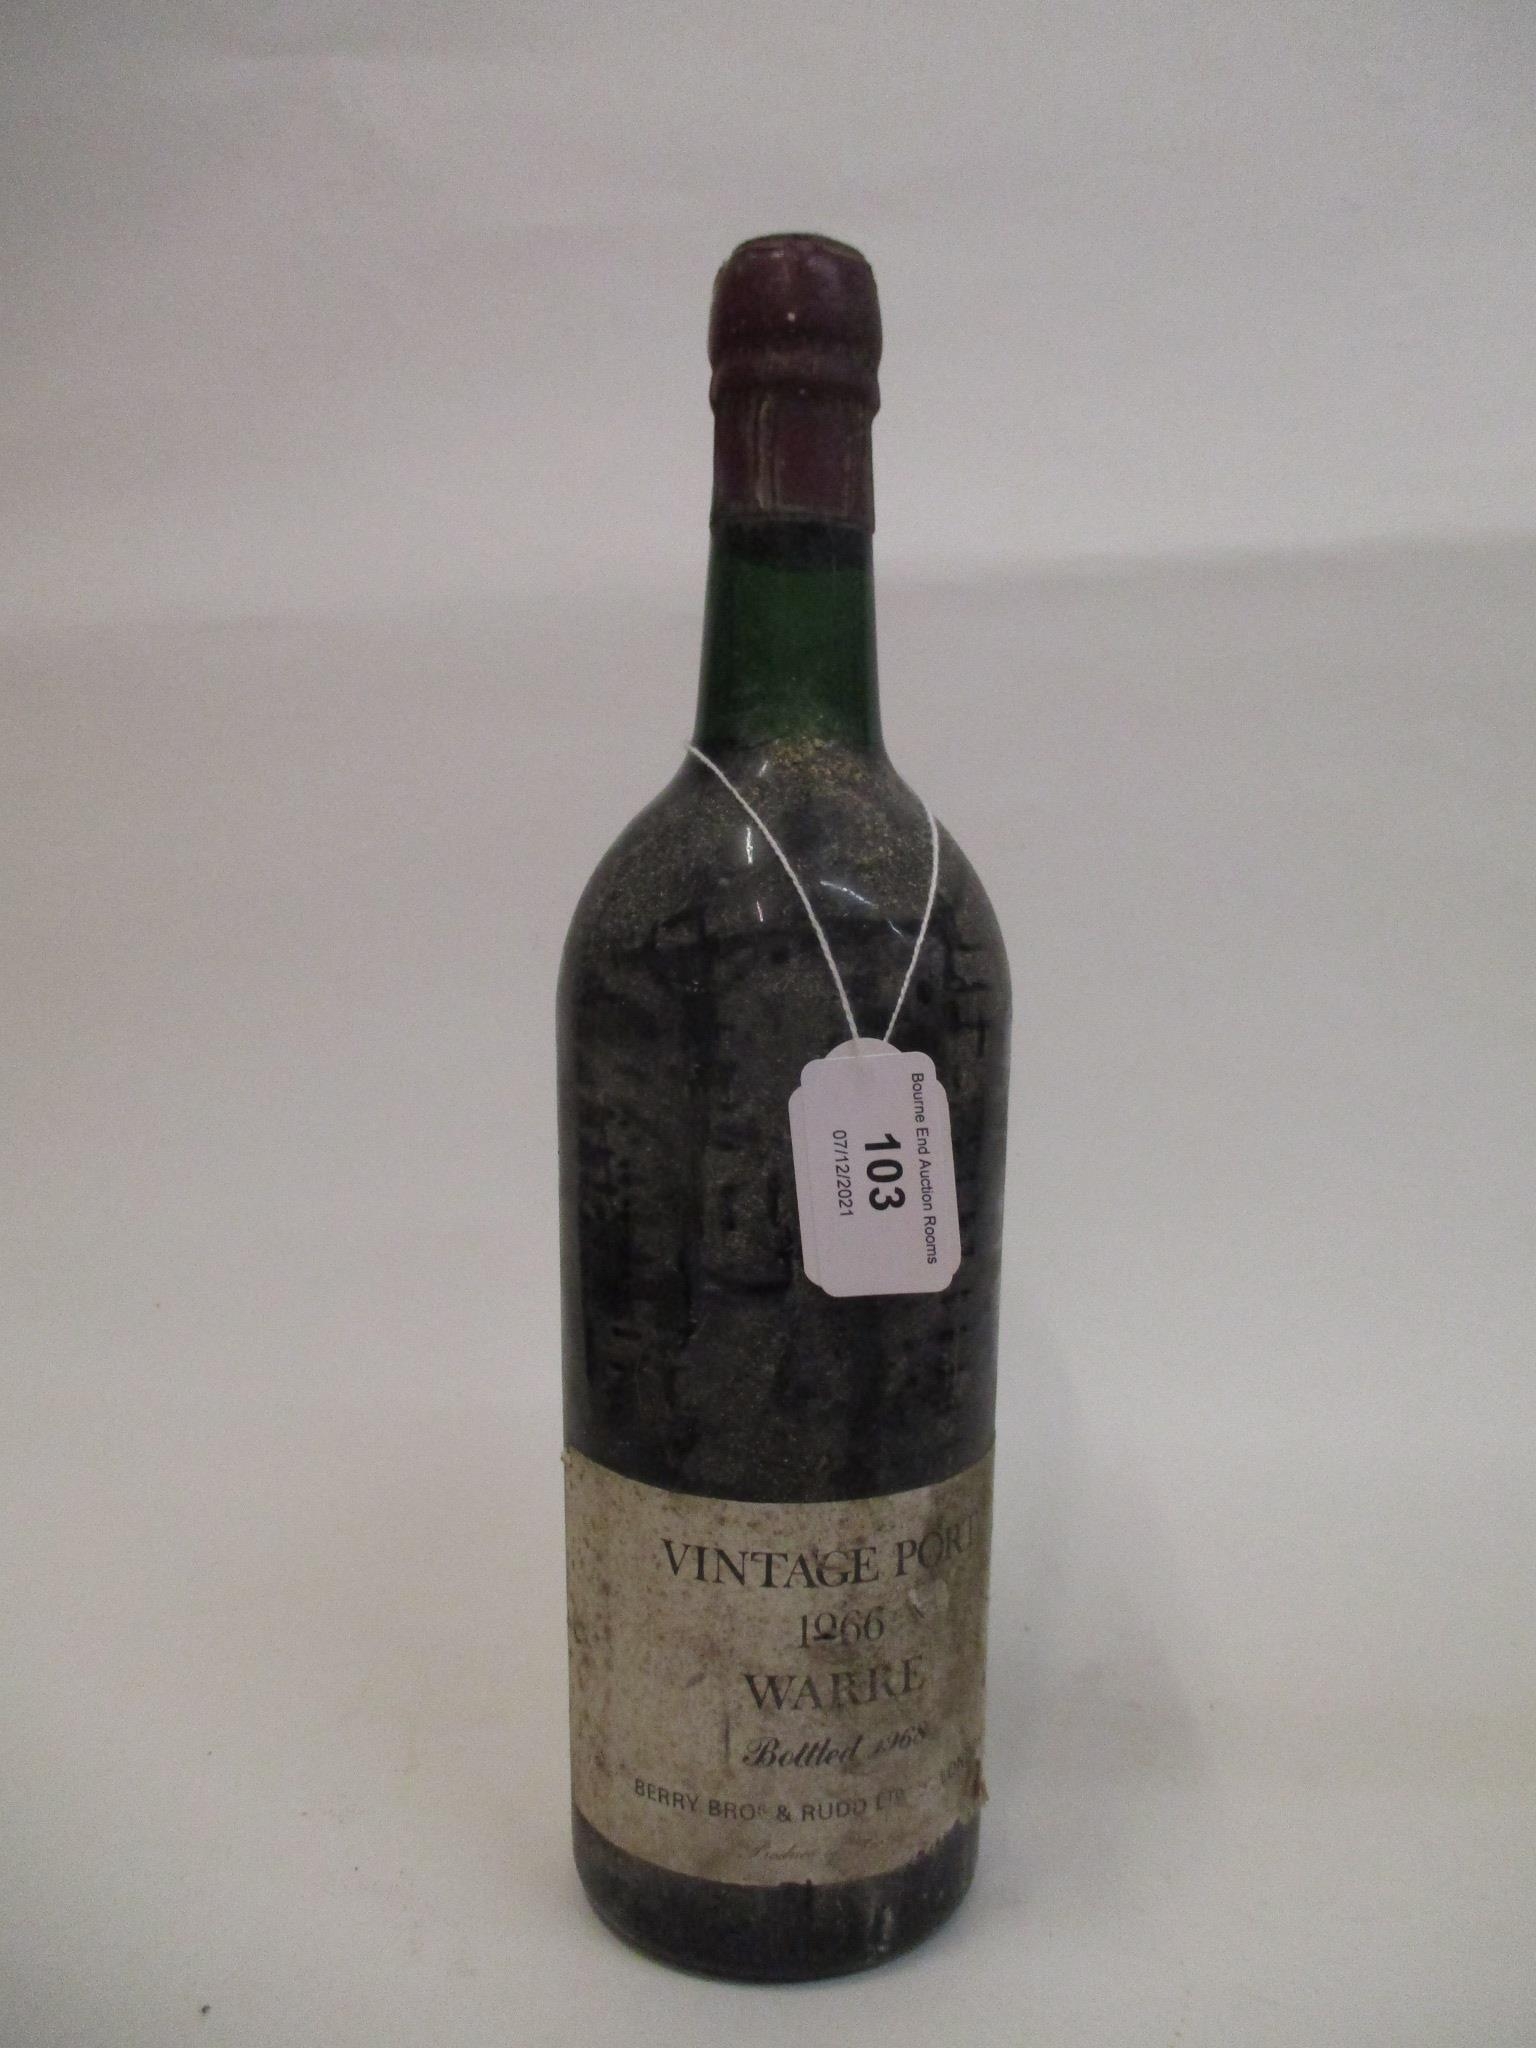 A single bottle of 1966 vintage Warre's port